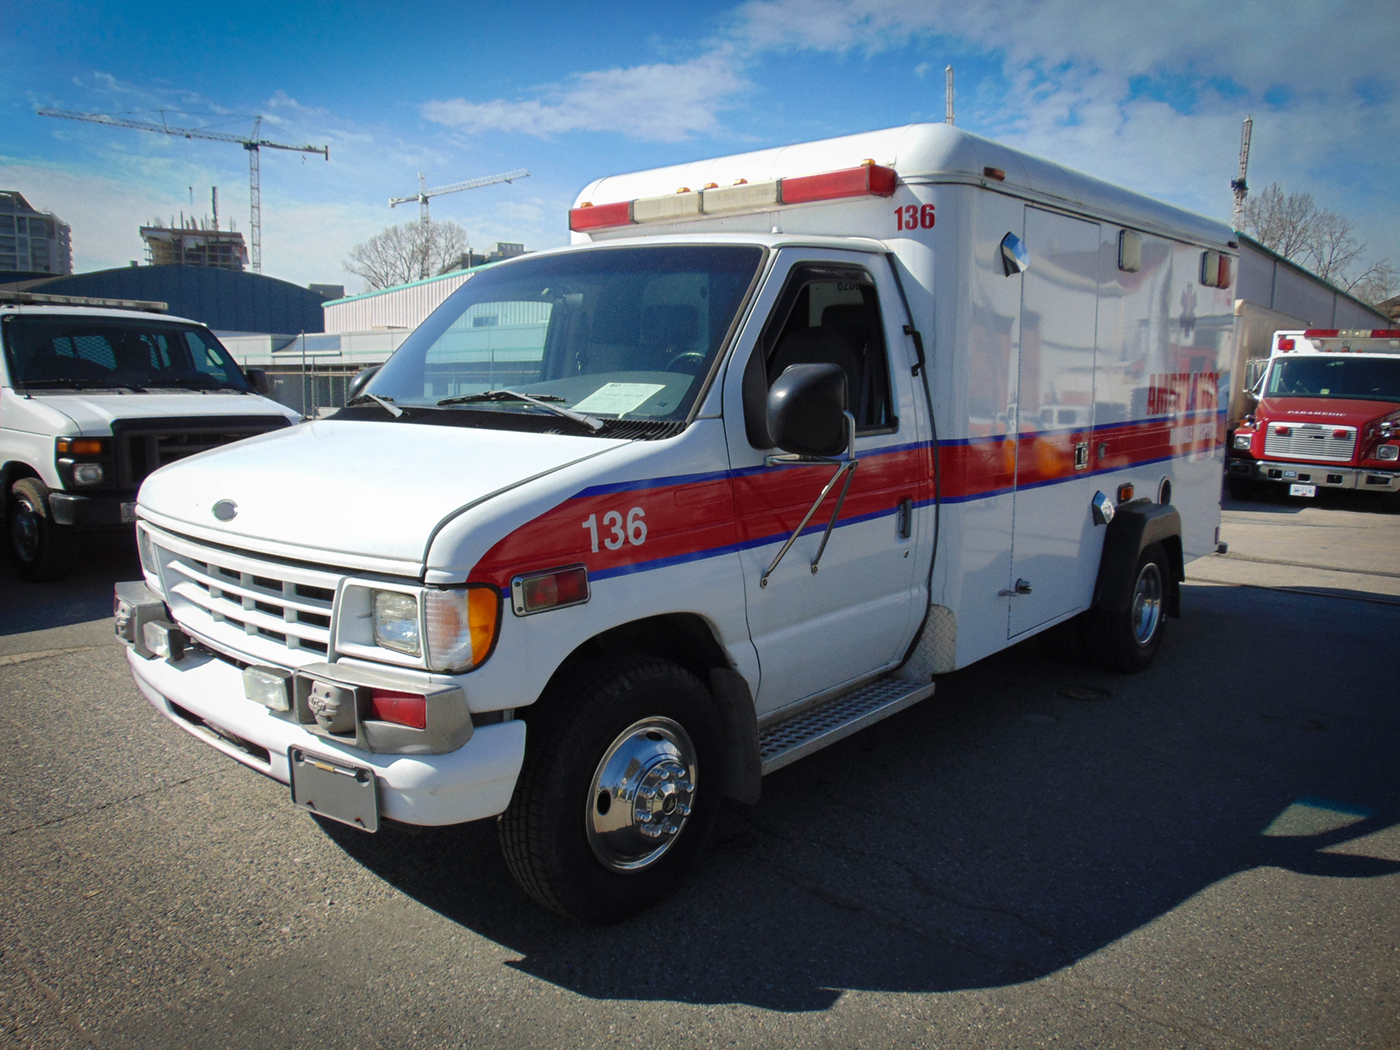 2001 Ford Ambulance For Rental